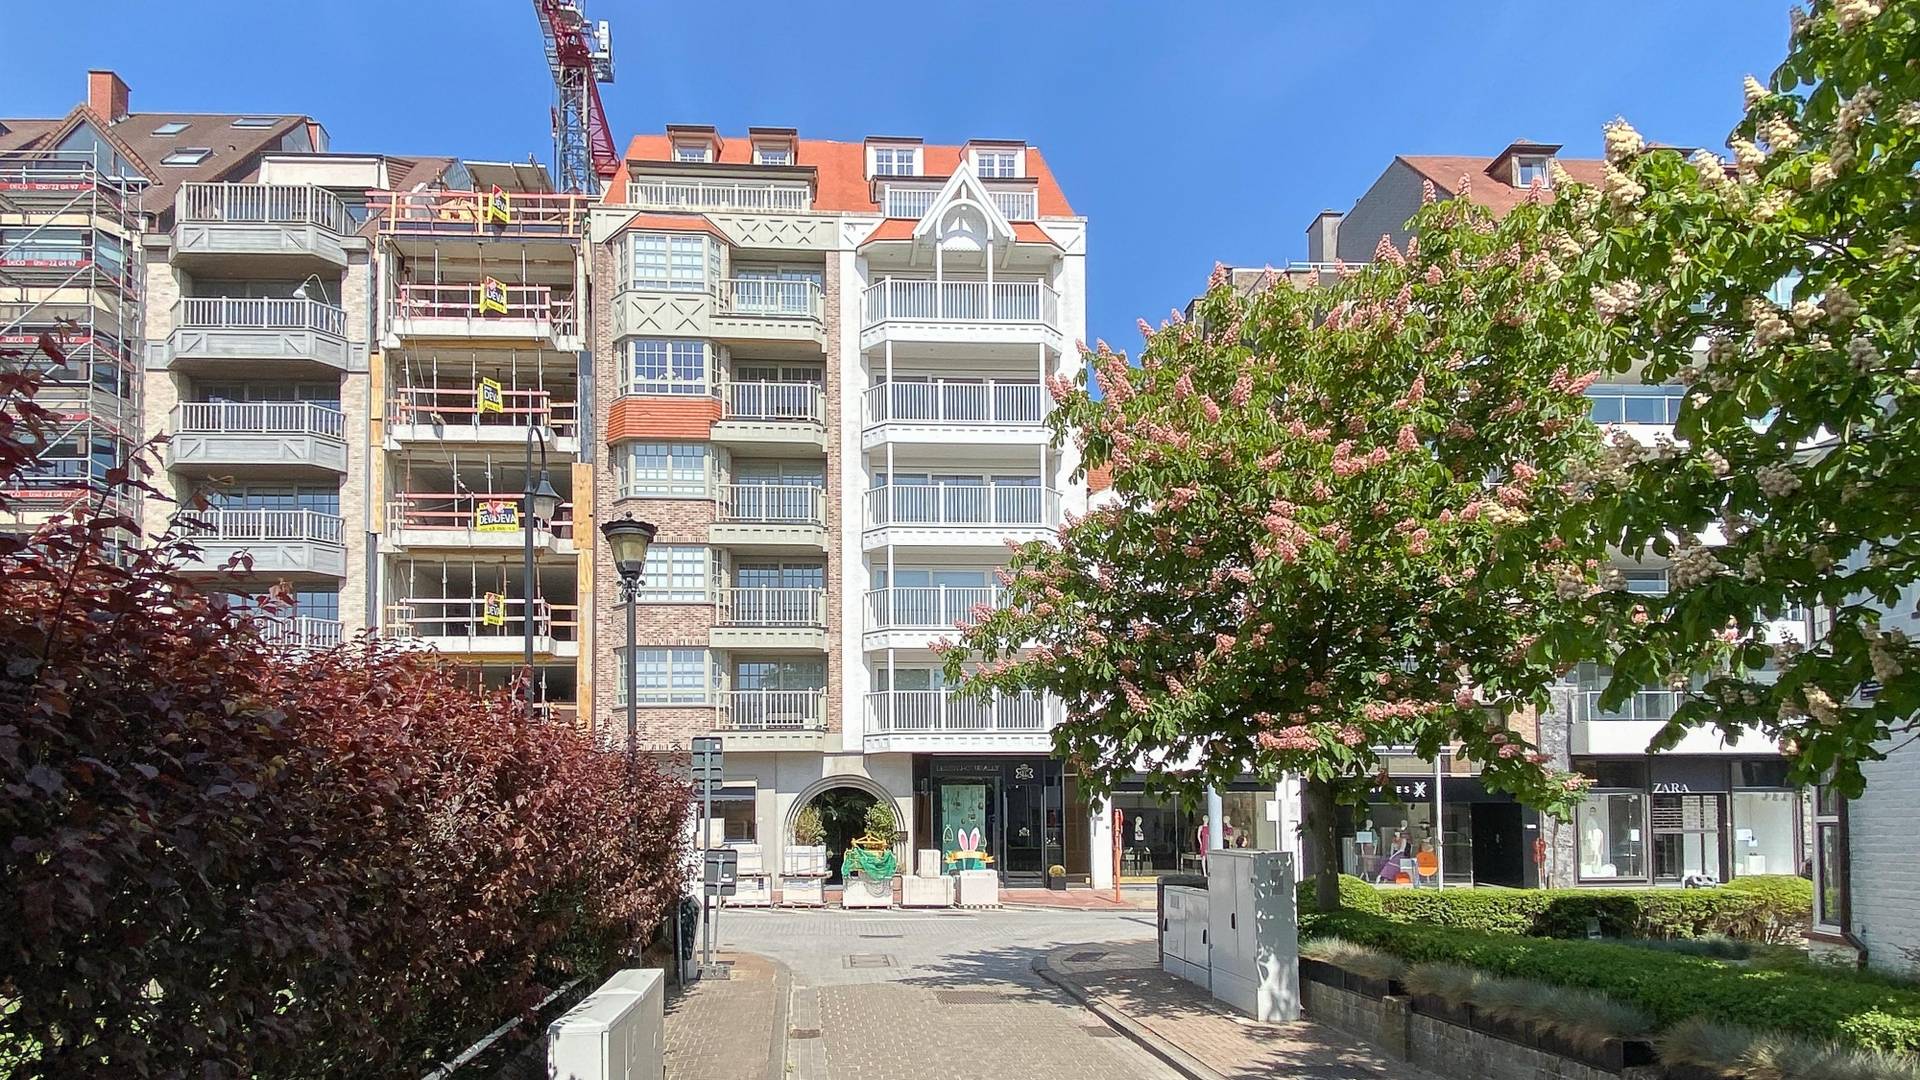 VERKOOP  Appartement 2 SLPK Knokke-Zoute -Kustlaan / Zoute View